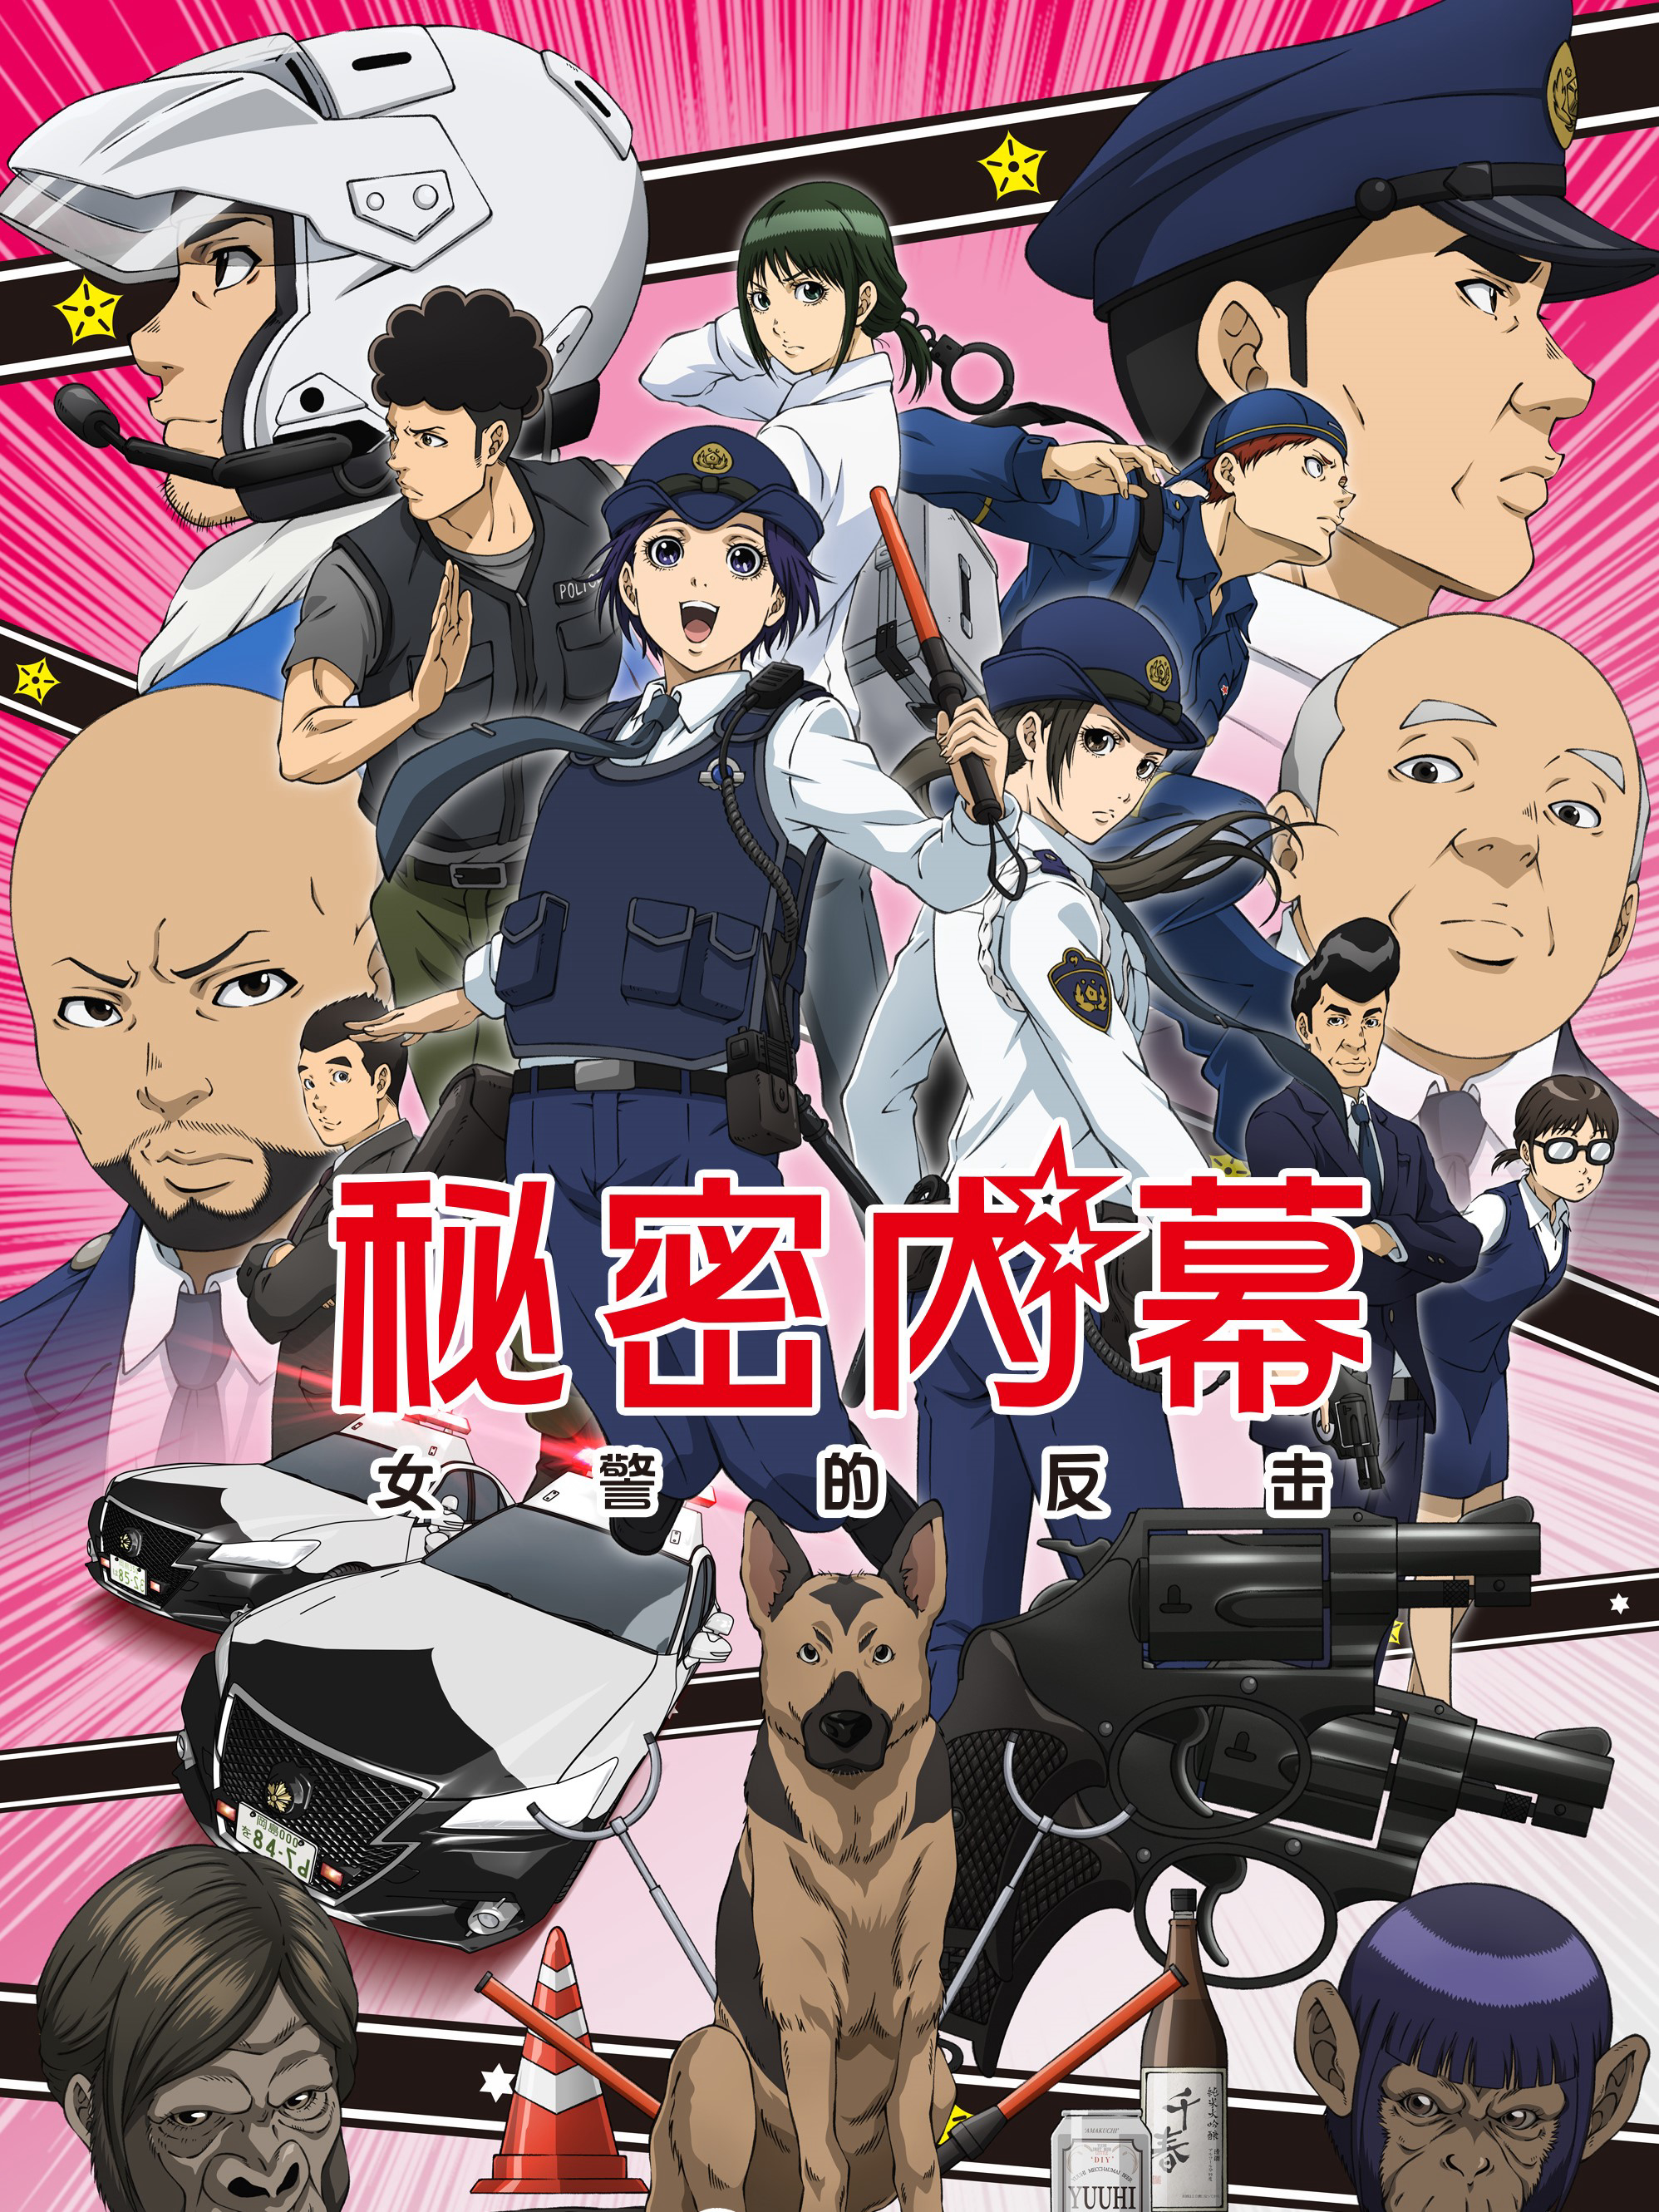 Xem Phim Hakozume: Nữ Cảnh Sát Phản Công (Police in a Pod, Hakozume: Kouban Joshi no Gyakushuu)